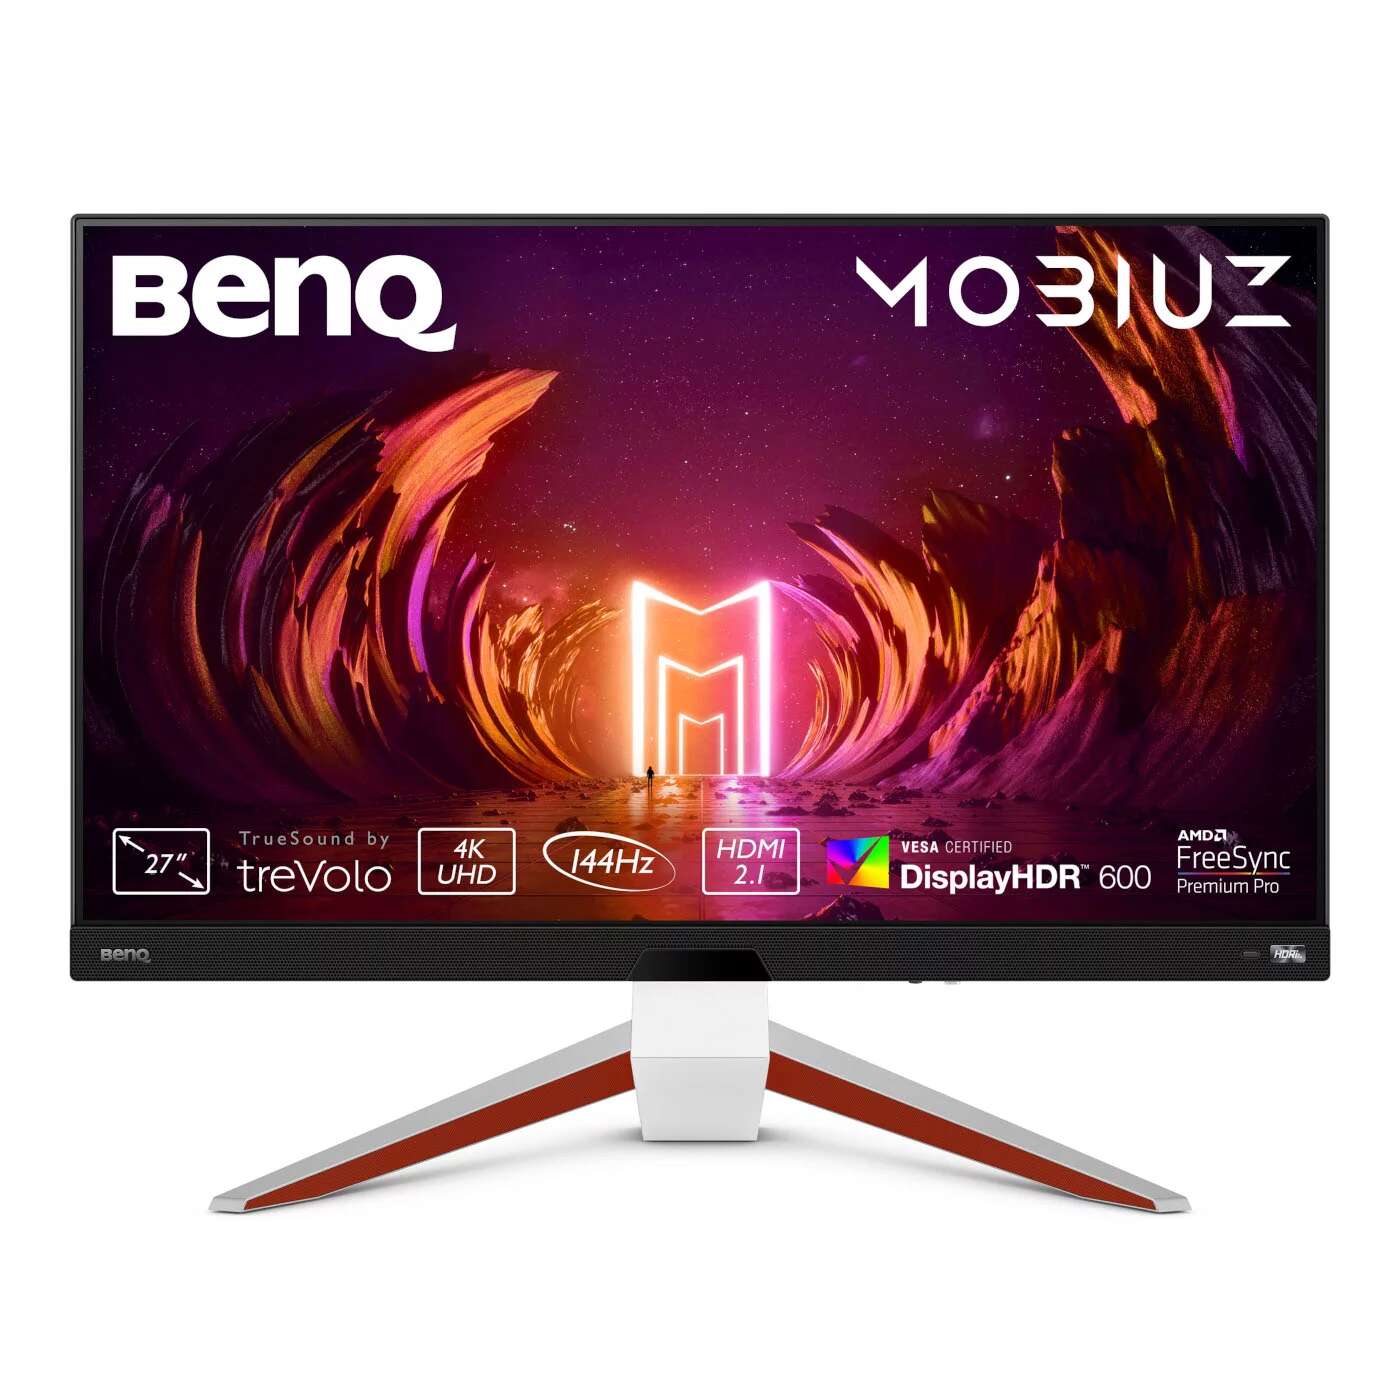 Benq 27" mobiuz ex2710u gaming monitor